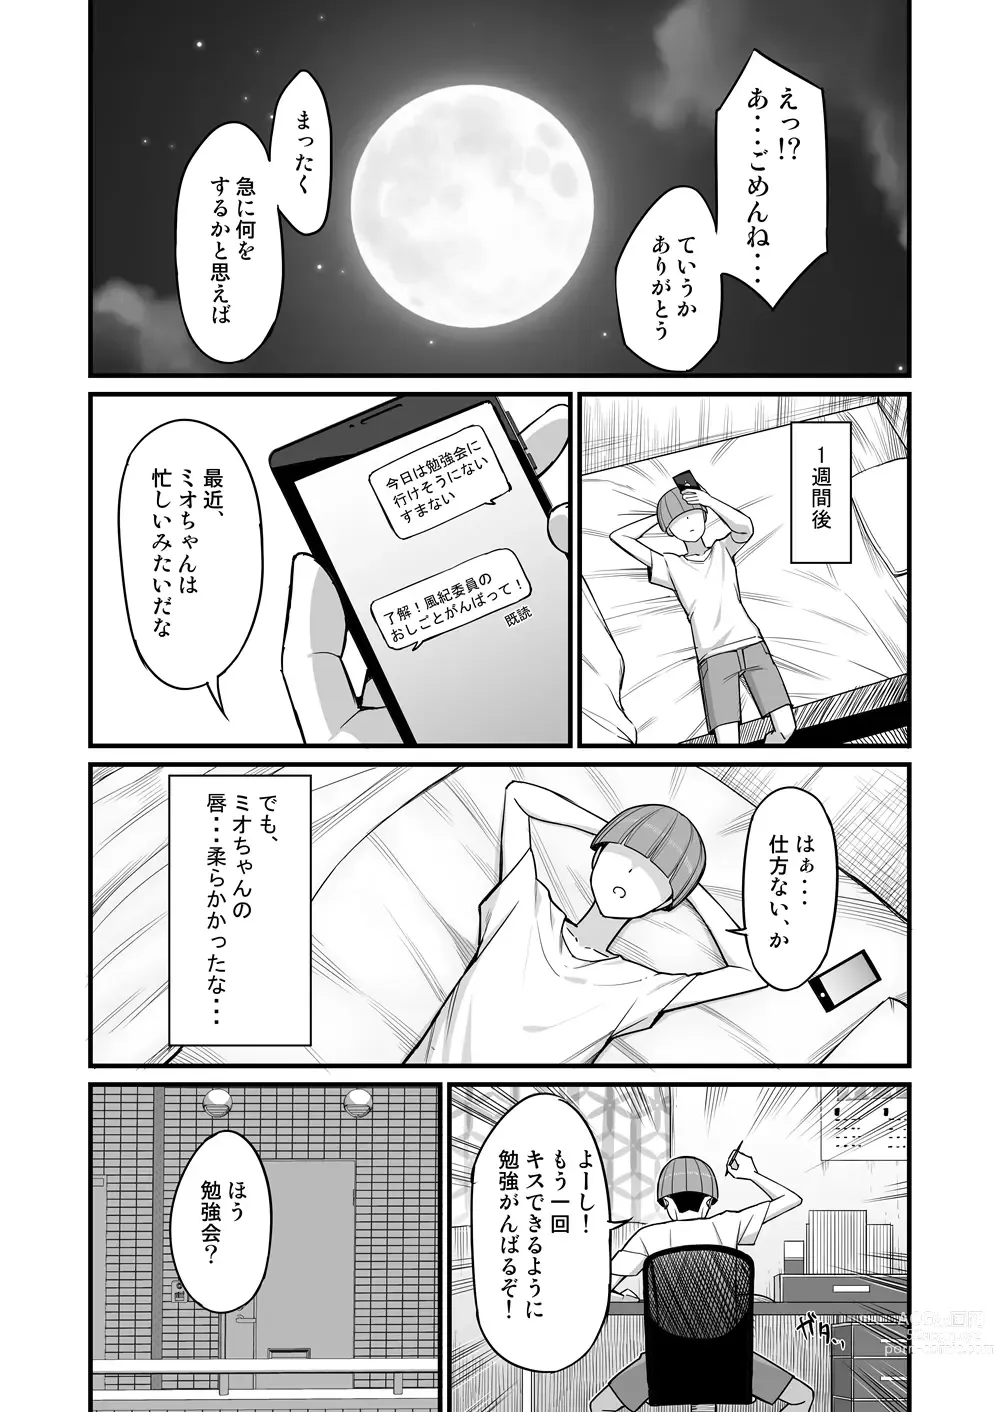 Page 10 of doujinshi NTR Fuuki Iin Mio